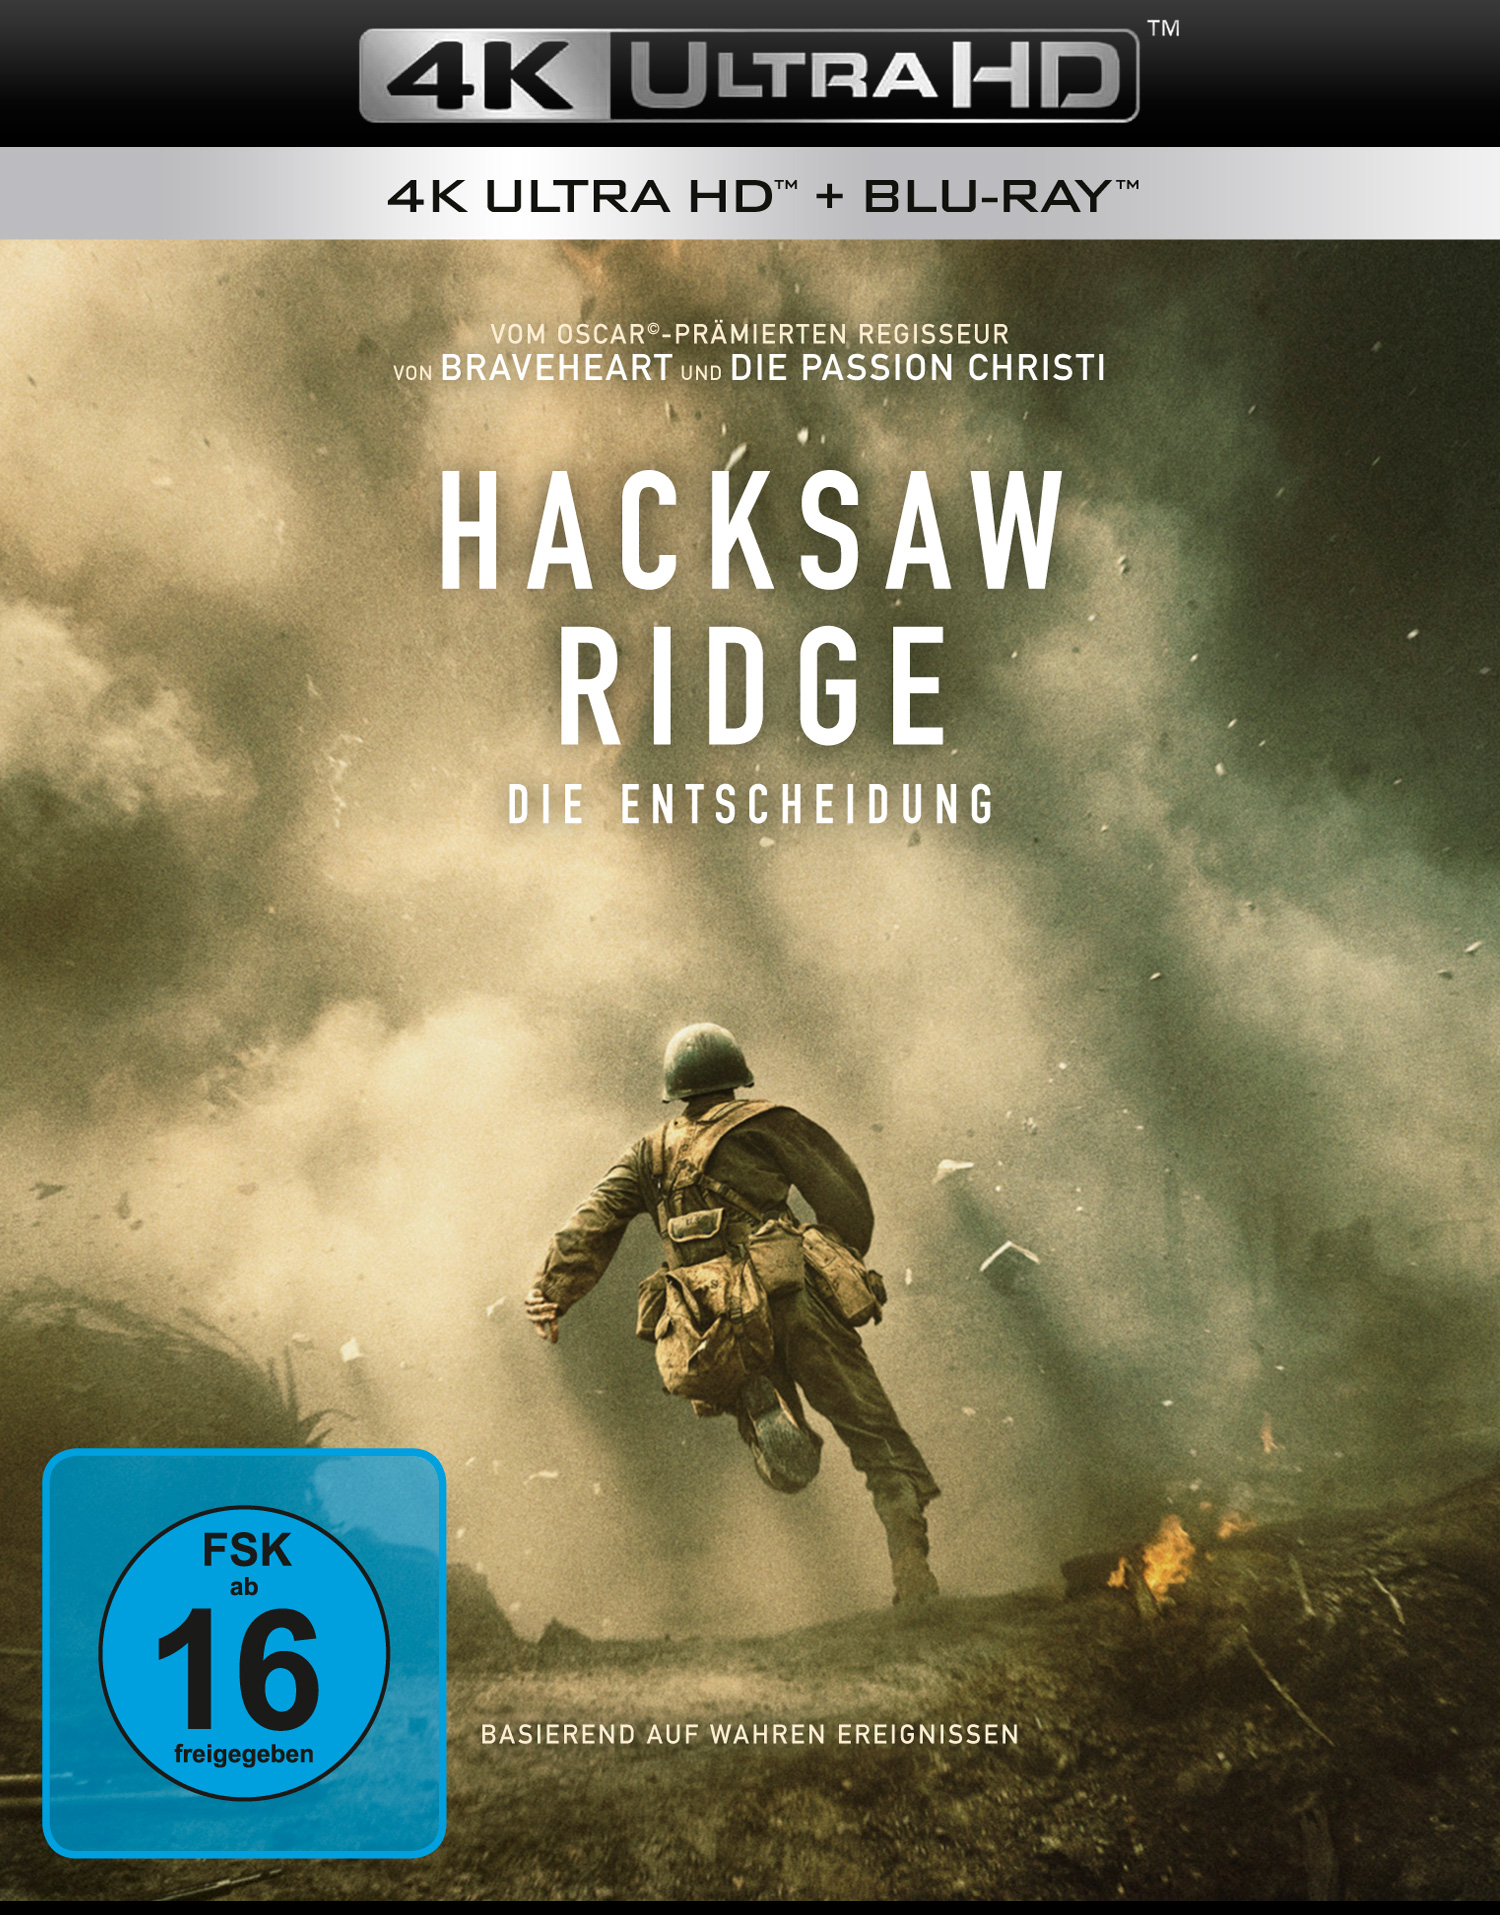 Blu-ray 4K Blu-ray Ultra HD Entscheidung + - Ridge Hacksaw Die